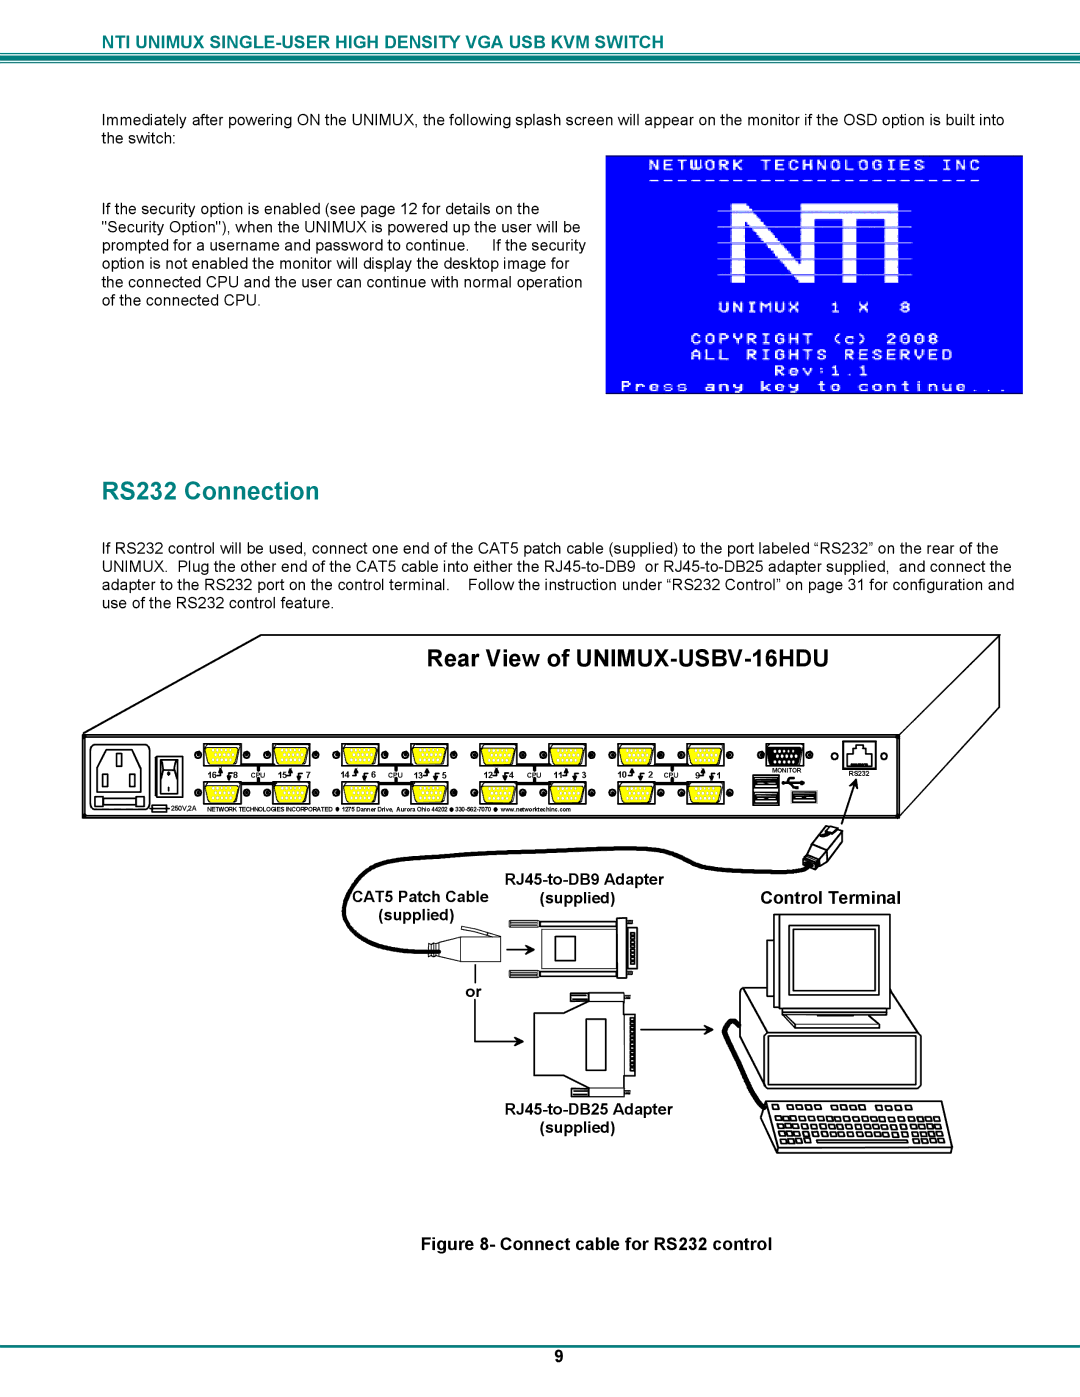 Network Technologies UNIMUXUSBVXHD operation manual RS232 Connection, Rear View of UNIMUX-USBV-16HDU 